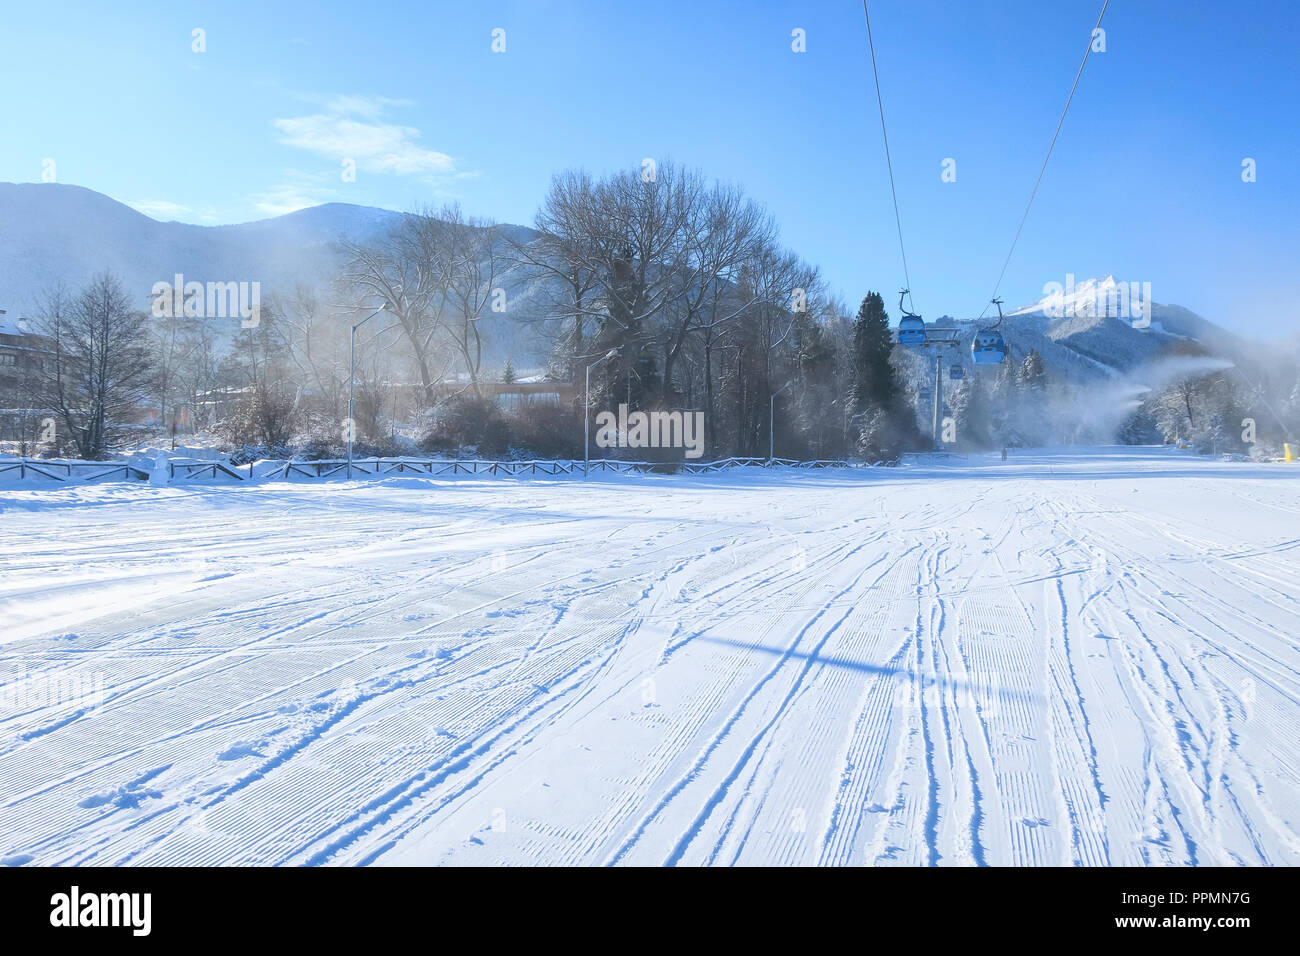 ski resort panorama with ski lift cabin, slope and snow mountains, Bulgaria Stock Photo